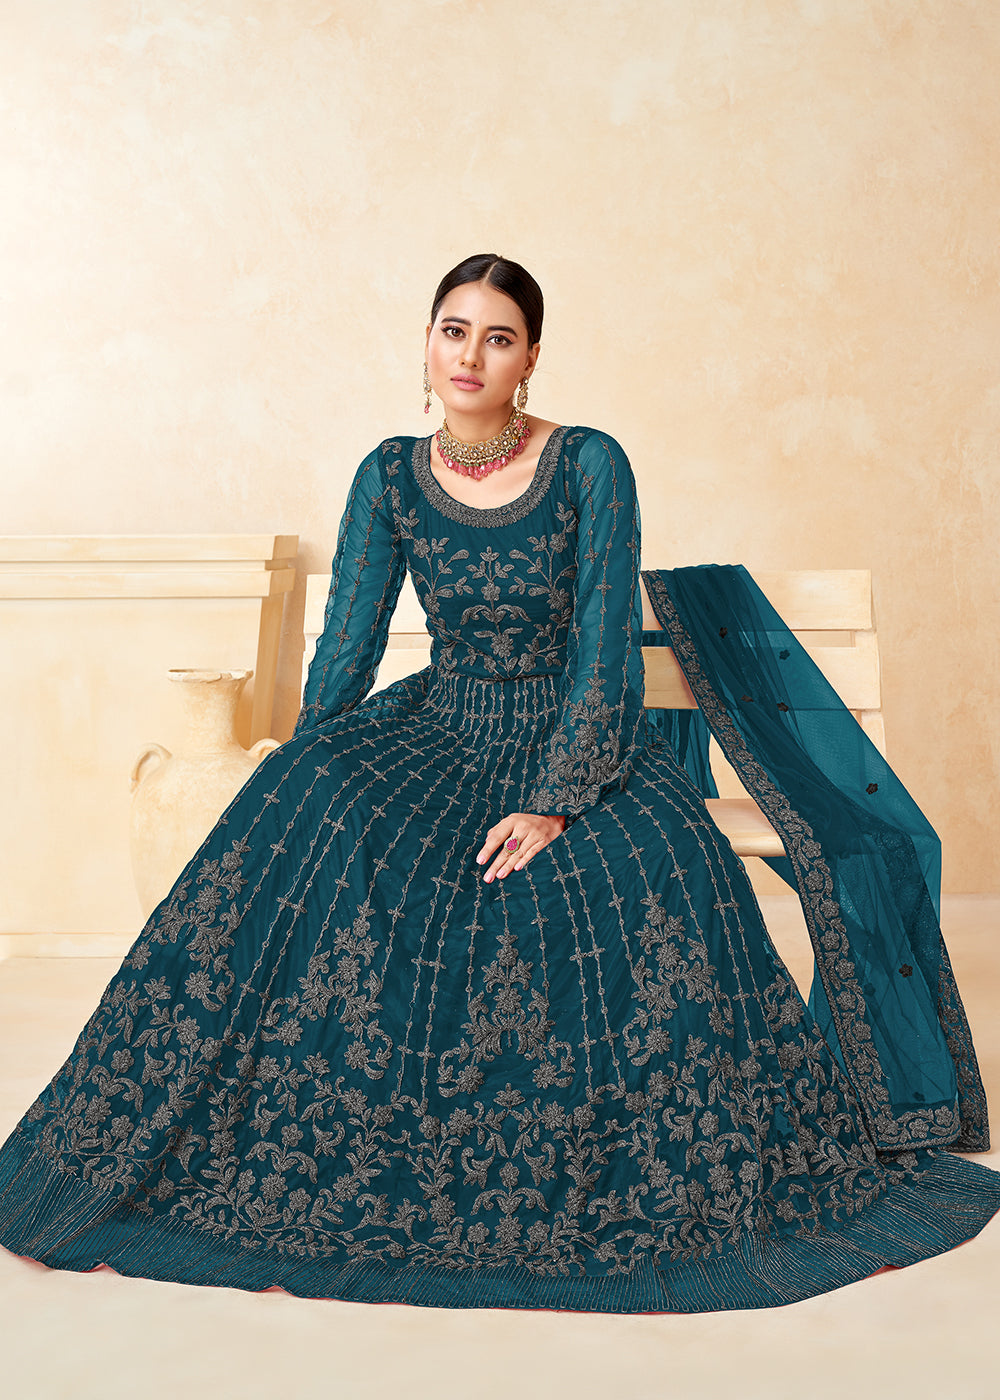 Buy Now Tempting Teal Blue Net Wedding Wear Anarkali Dress Online in USA, UK, Australia, New Zealand, Canada & Worldwide at Empress Clothing.